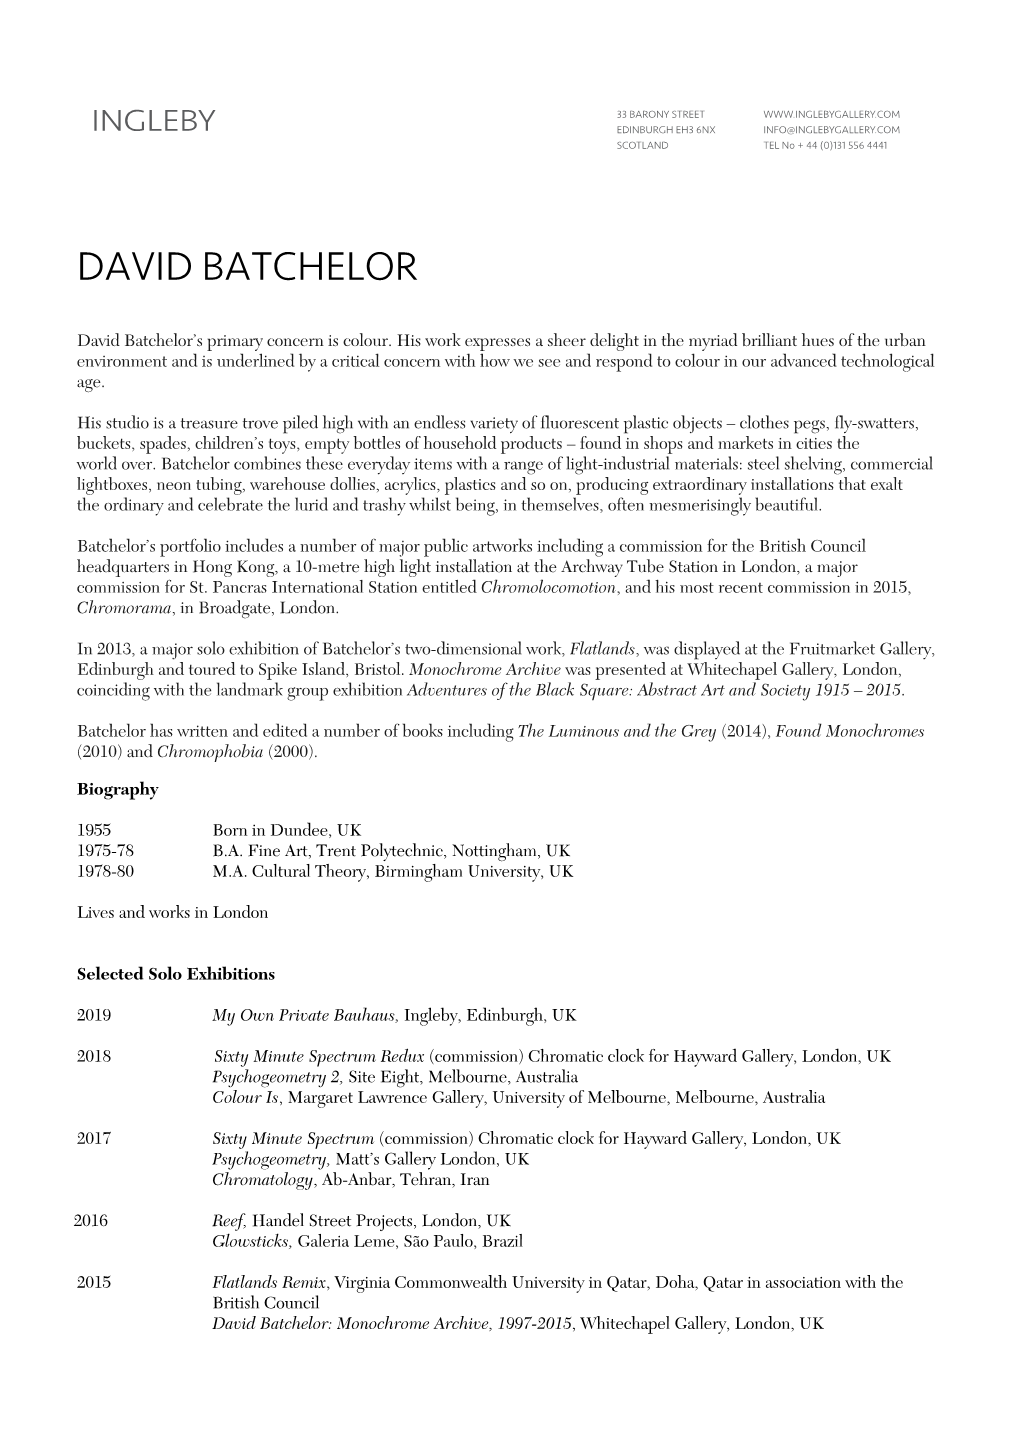 David Batchelor